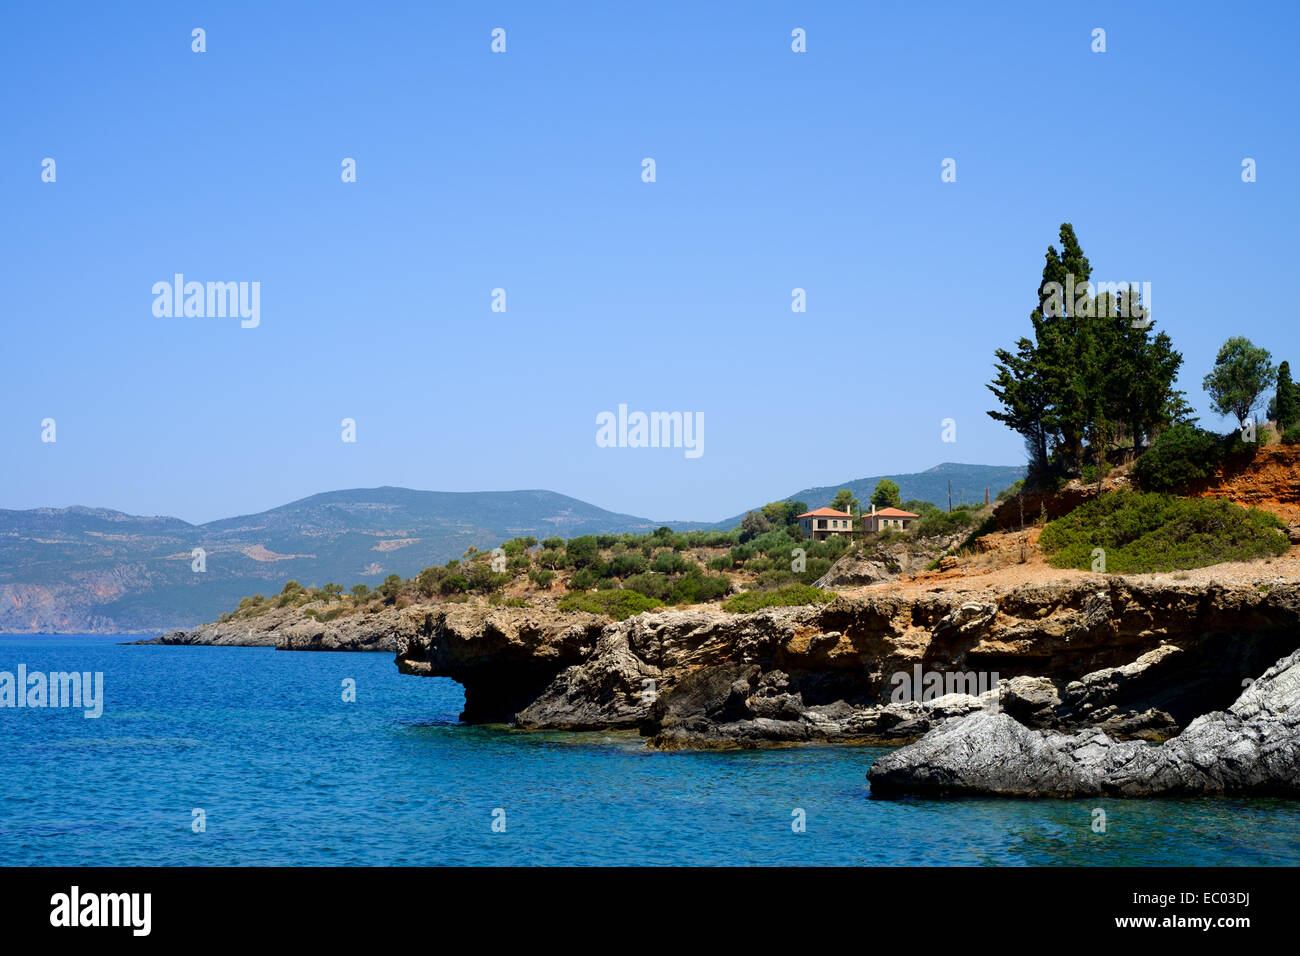 South of Kardamyli (Kardamili) - Mani Peninsula, Peloponnese, Greece. Where writer Patrick Leigh Fermor lived - see description Stock Photo